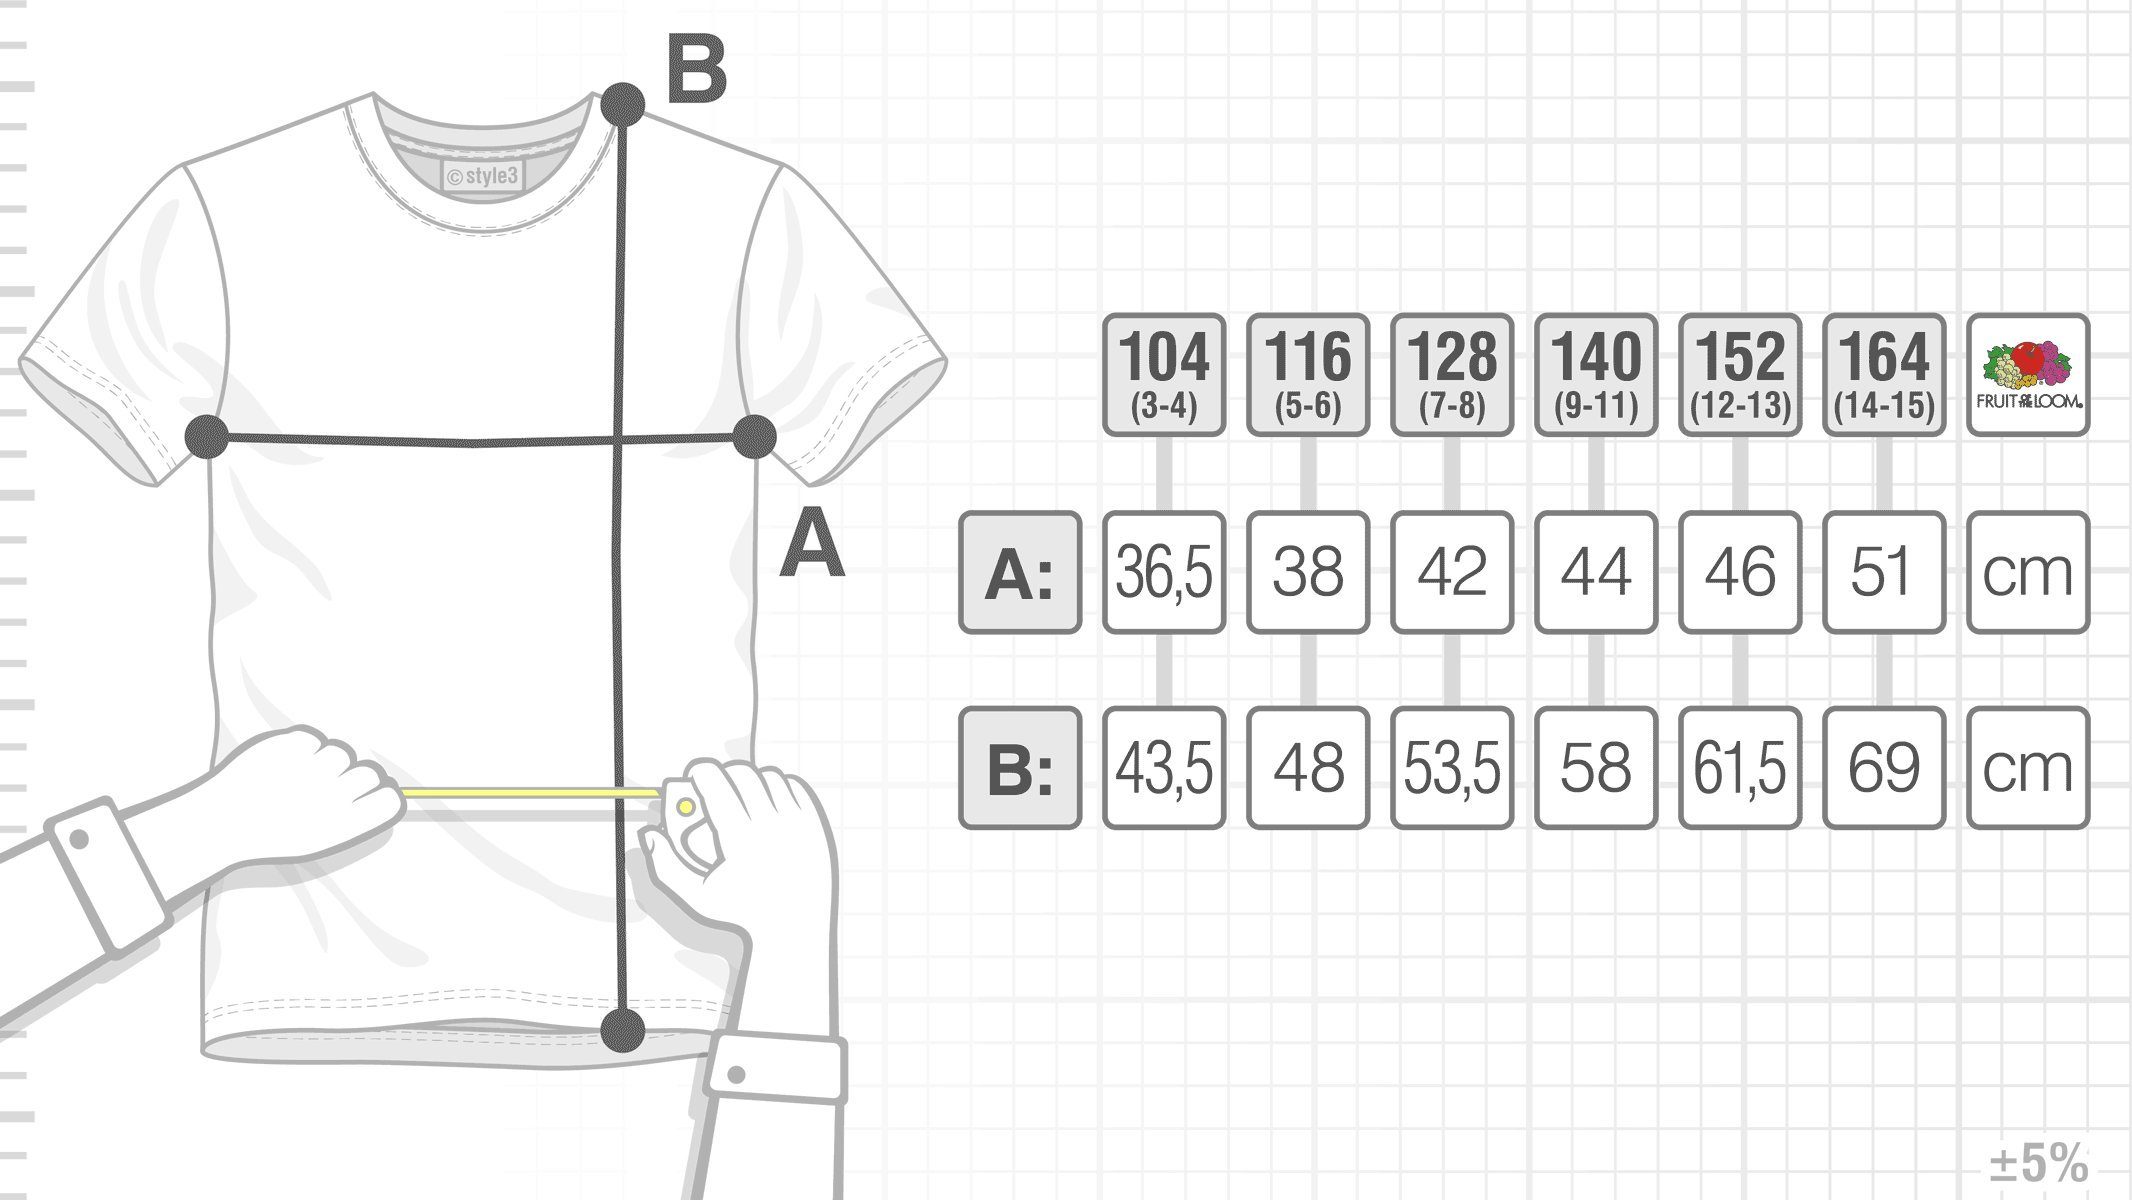 Print-Shirt style3 32-Bit controller Kinder Blaupause schwarz Boy videospiel Virtual T-Shirt